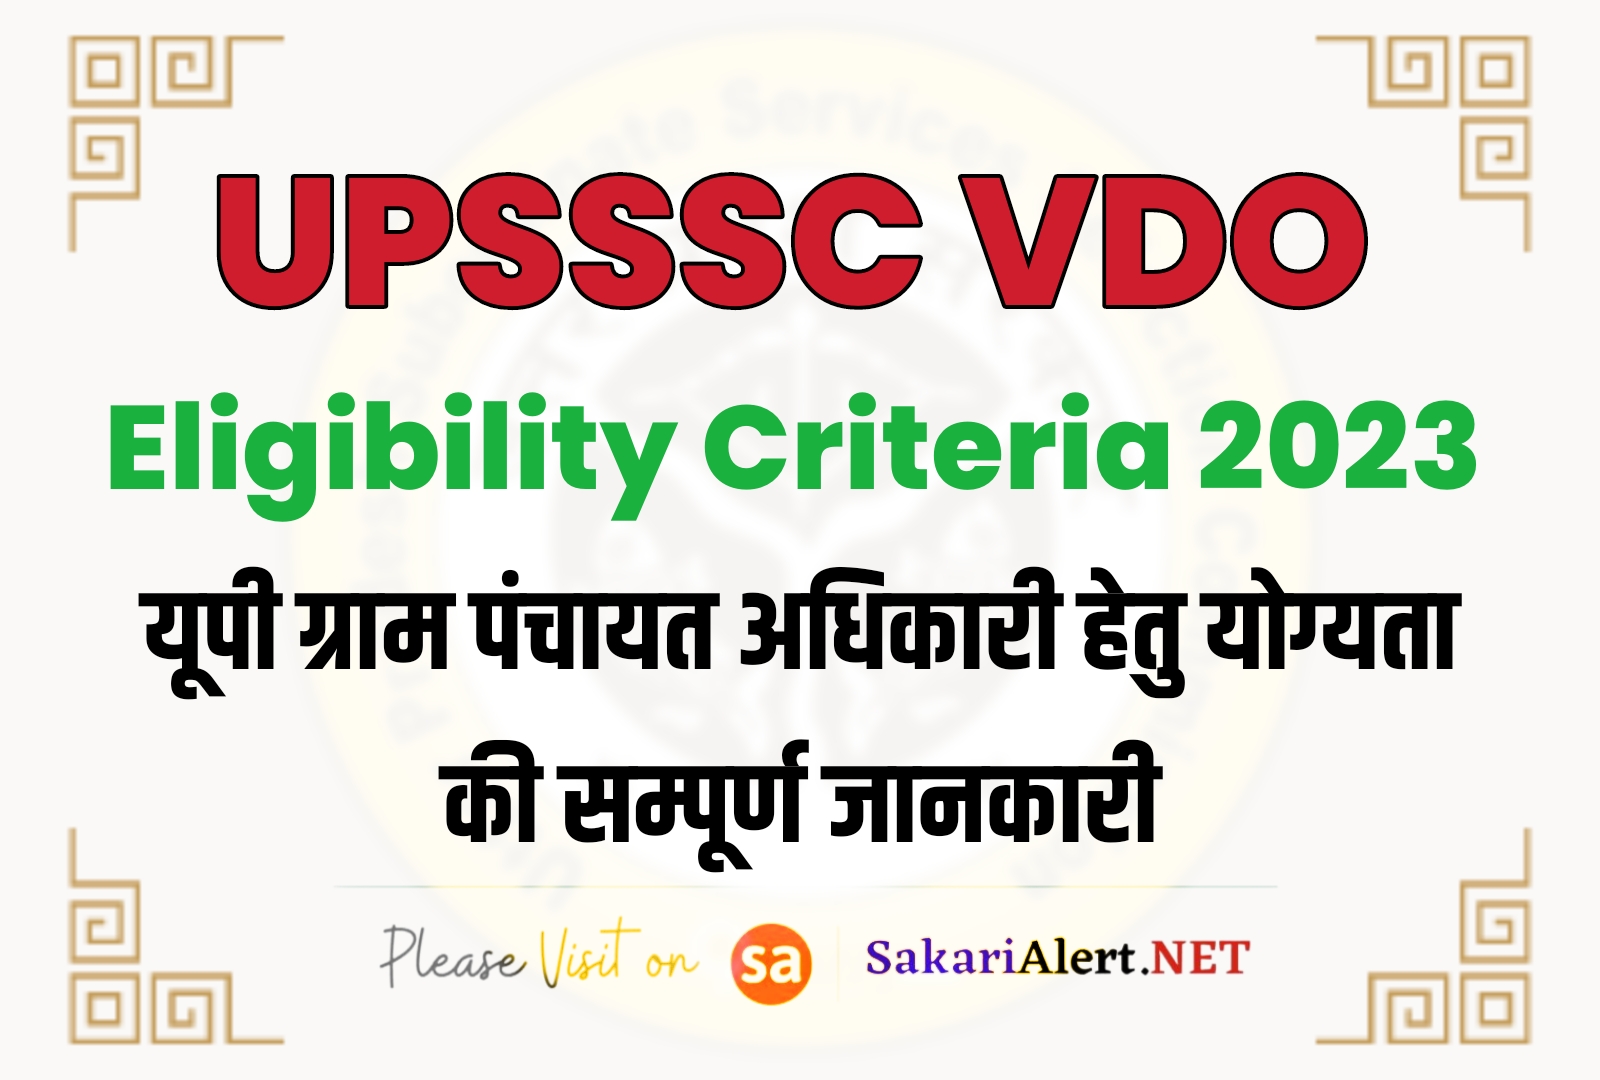 UPSSSC VDO Eligibility Criteria 2023